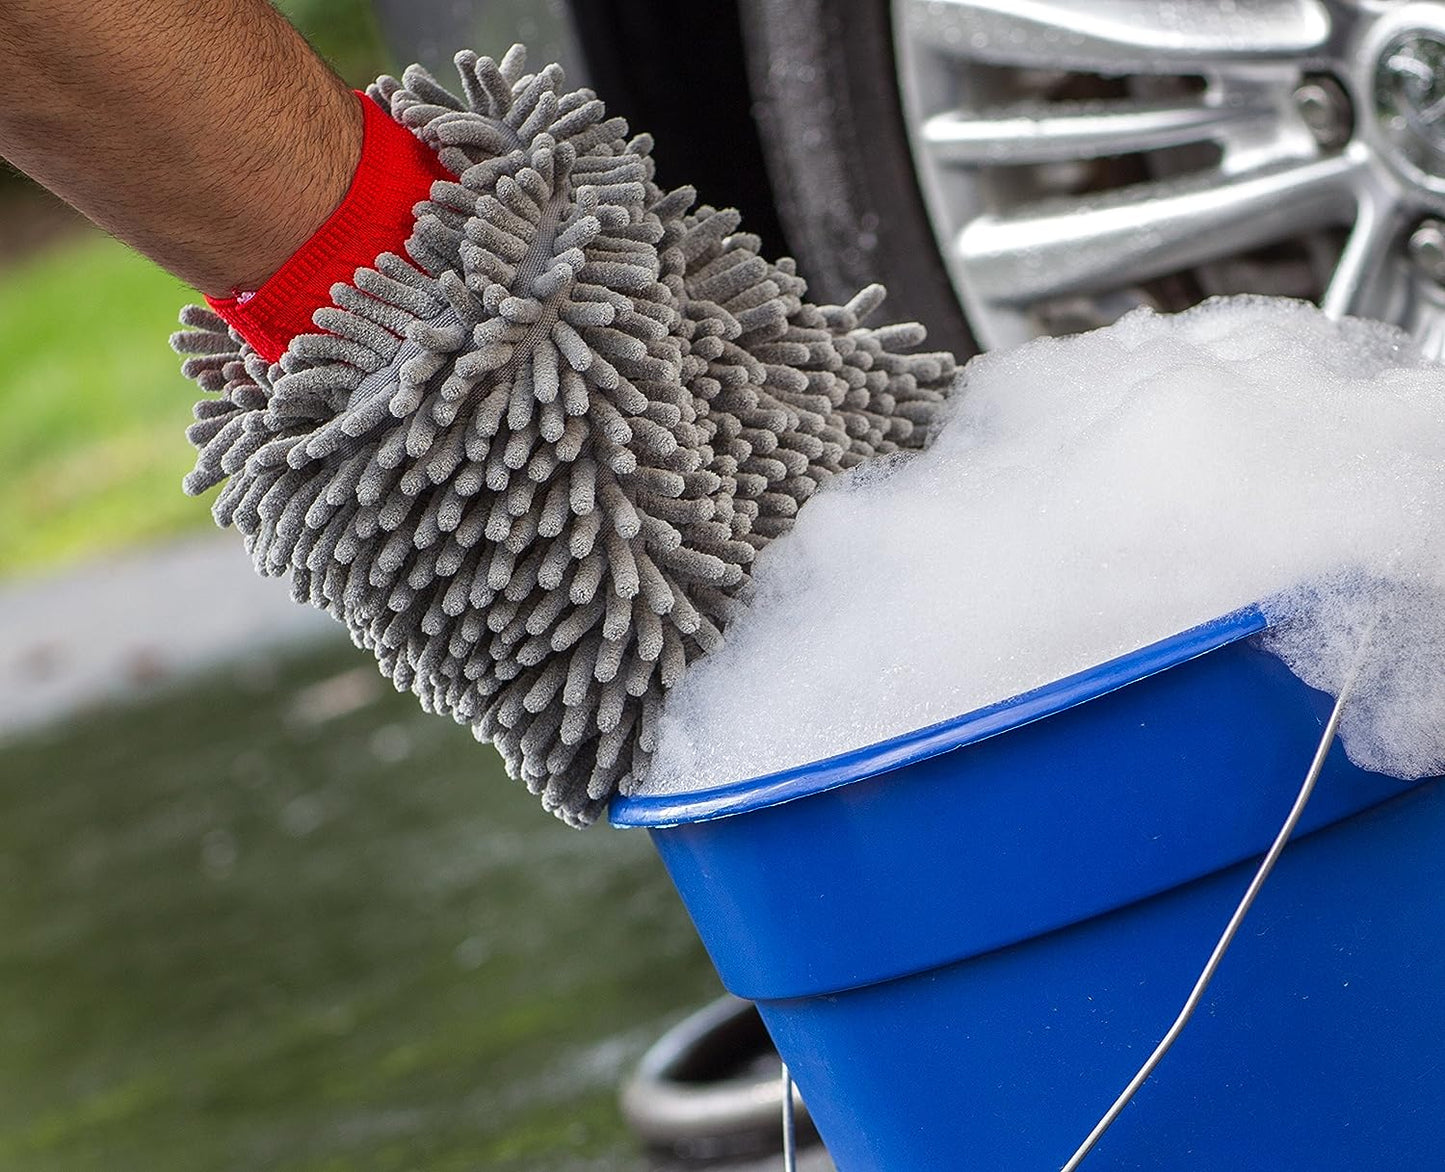 Chenille Microfiber Wash Mitt, Car Cleaning Gloves